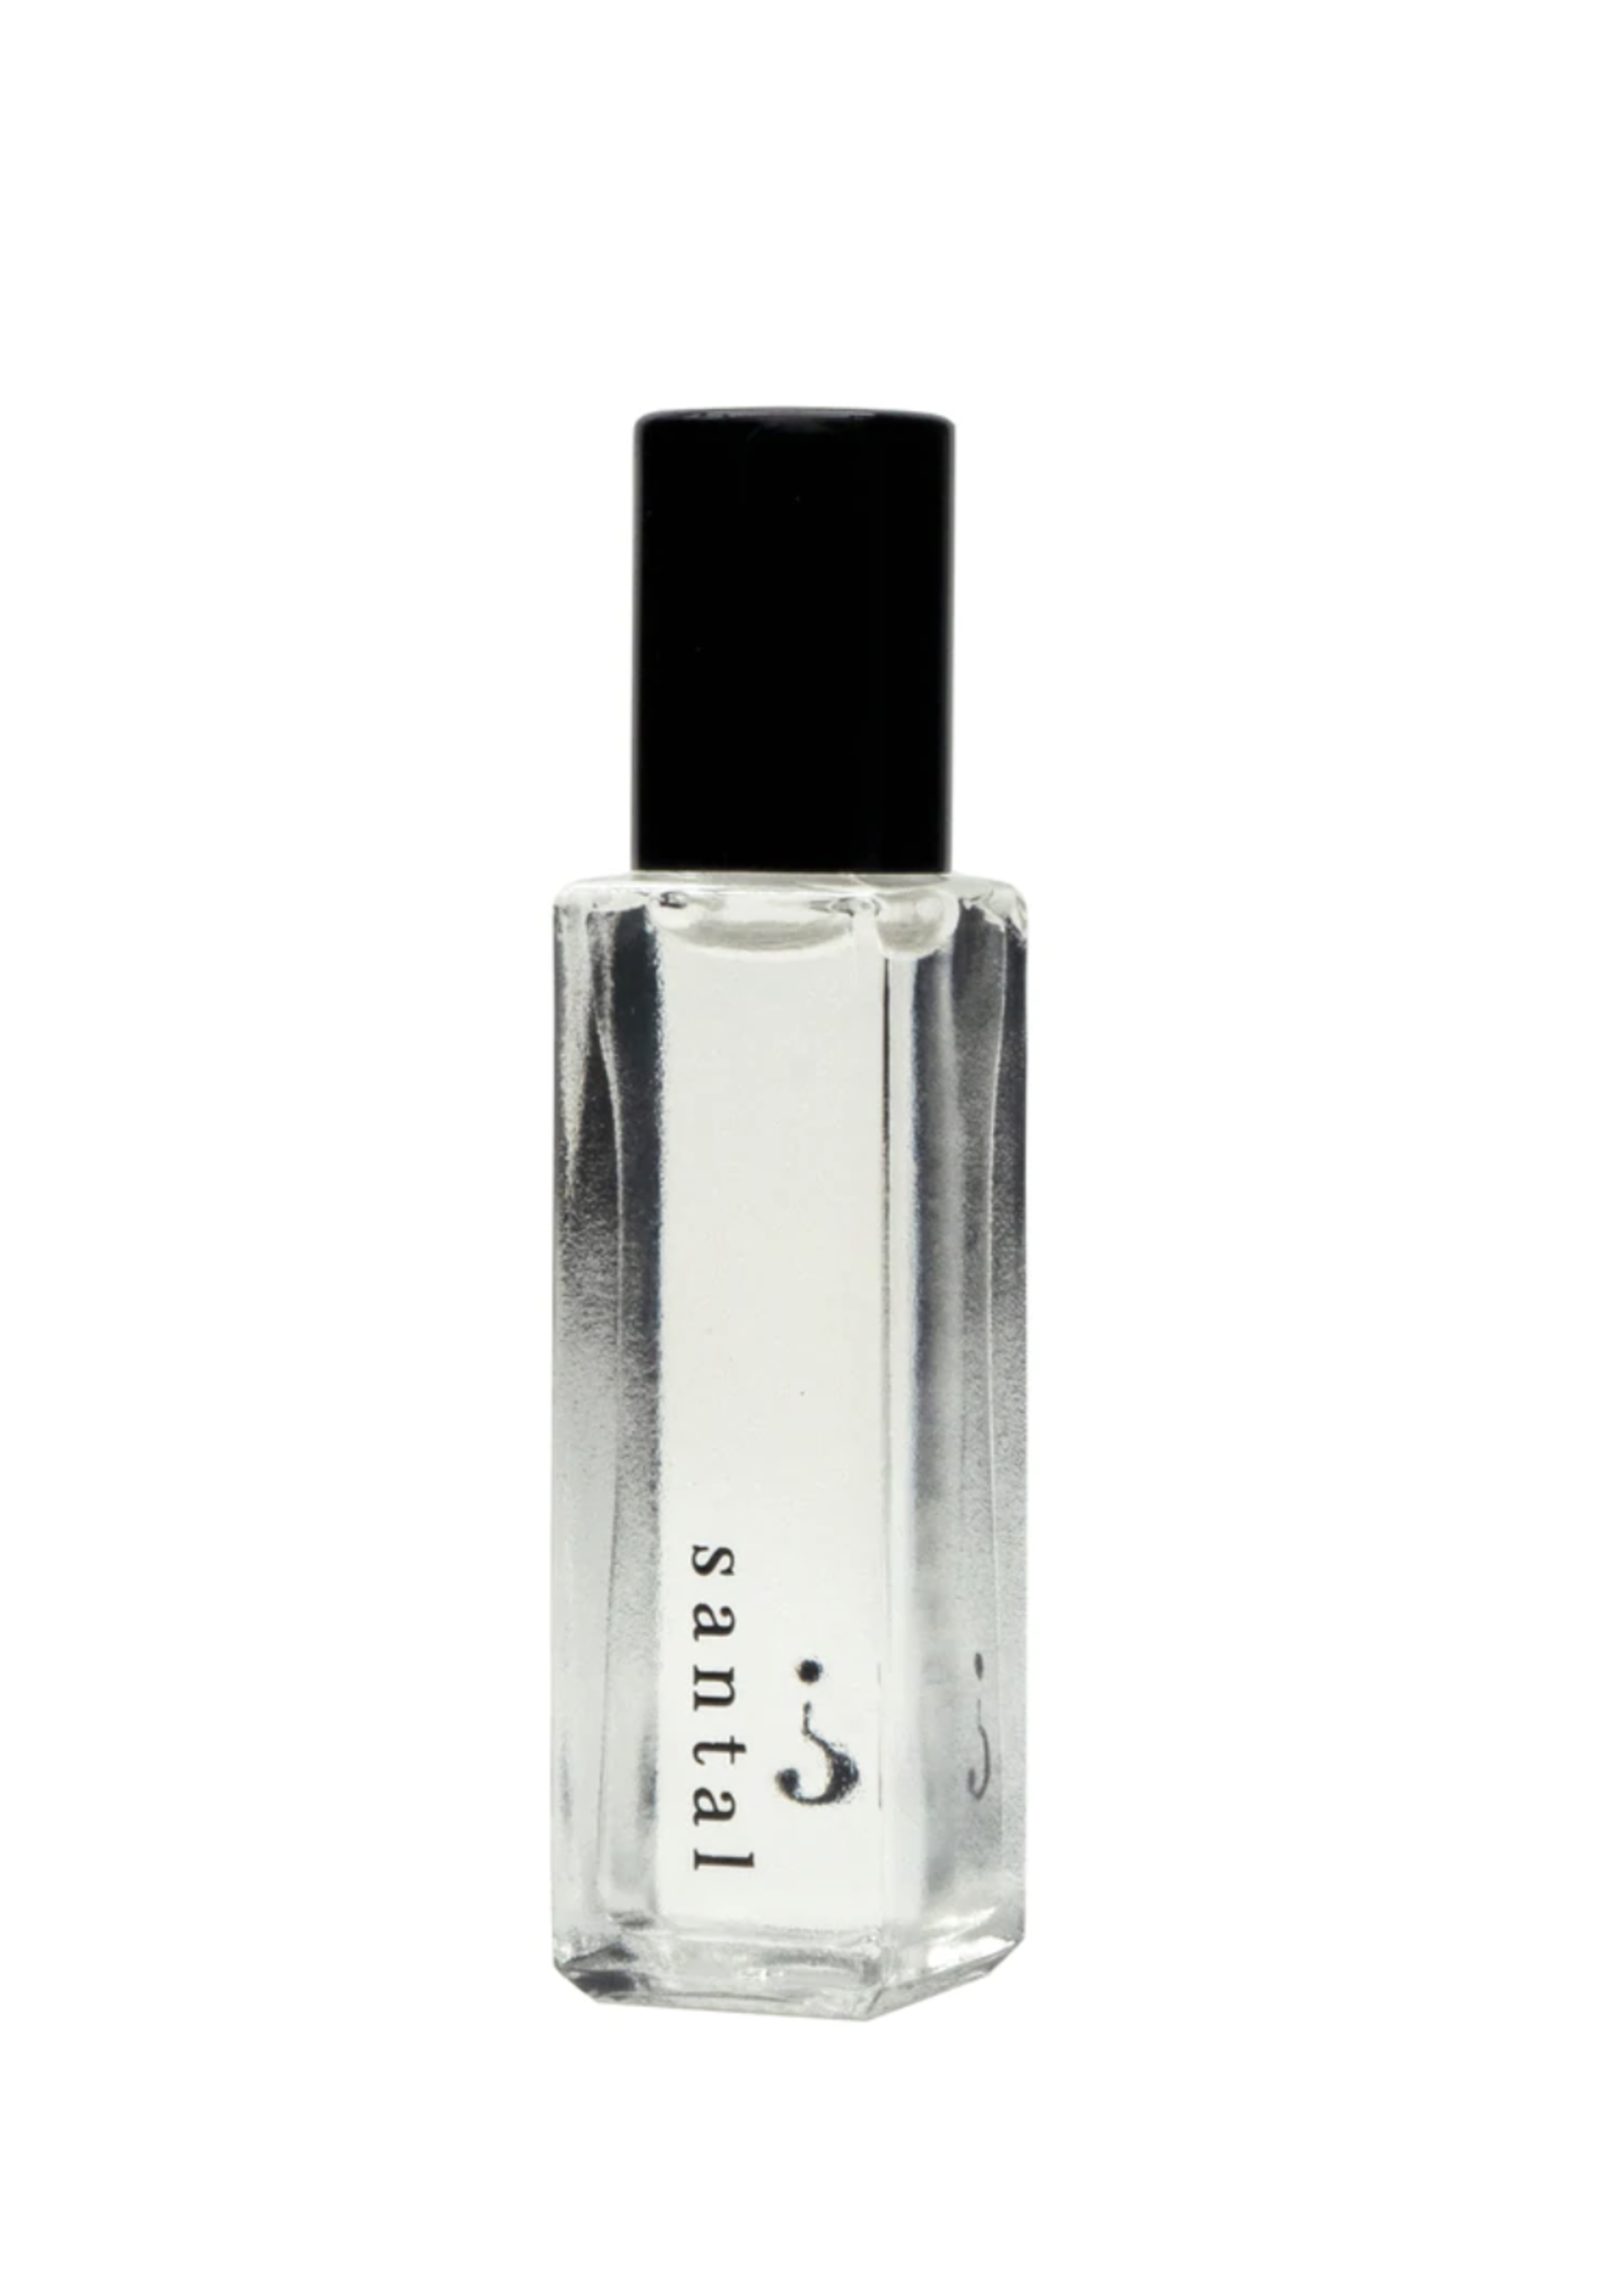 Riddle Oil Perfume Oil | Santal